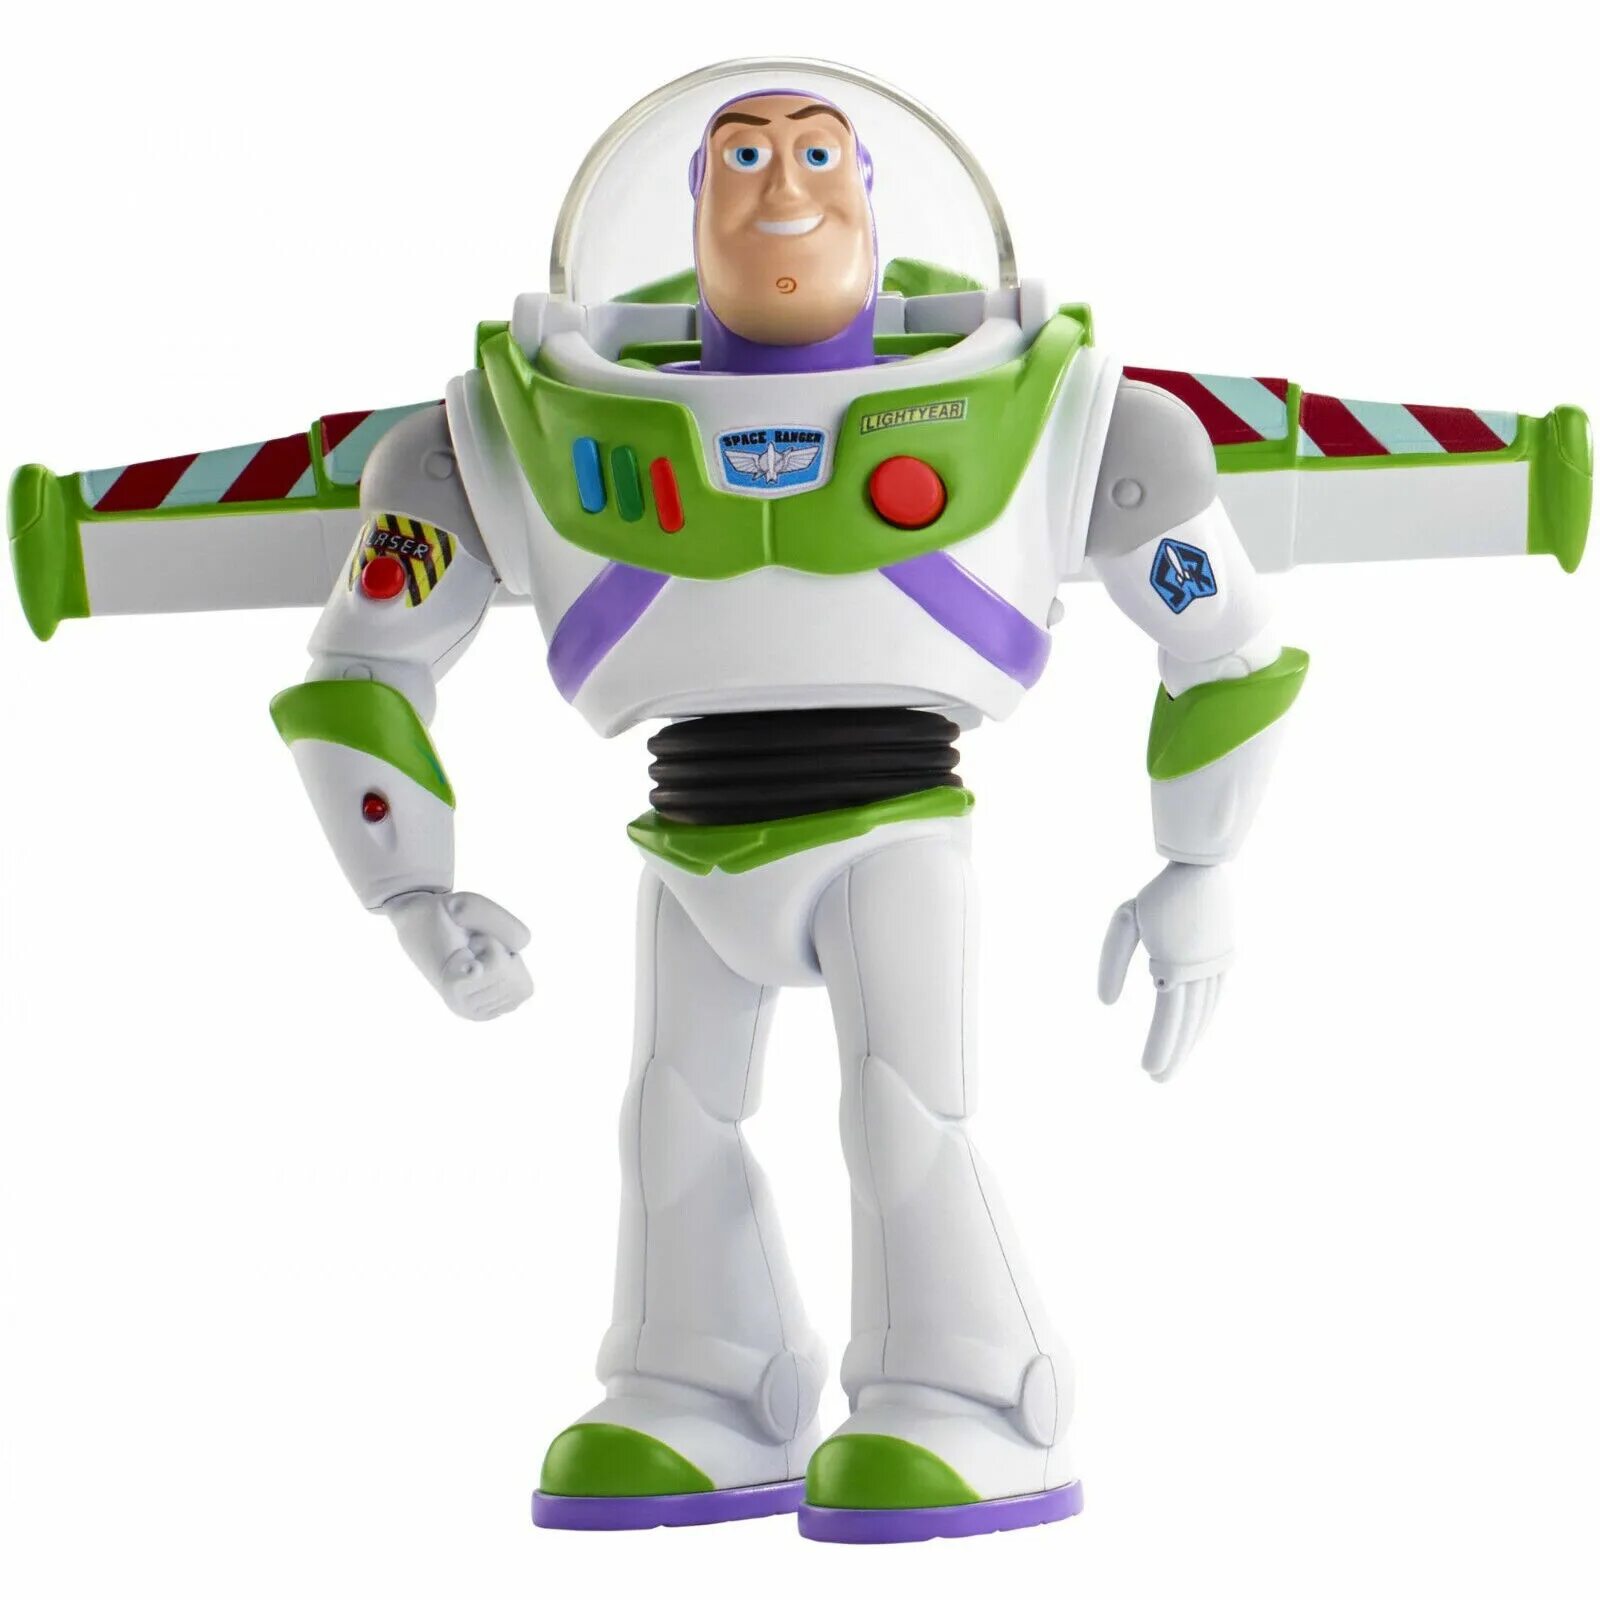 Buzz toy. Базз Лайтер игрушка 4. Игрушка Базз Лайтер из истории игрушек. Базз Toy story 4 игрушка. Игрушка Toy story Buzz Lightyear.